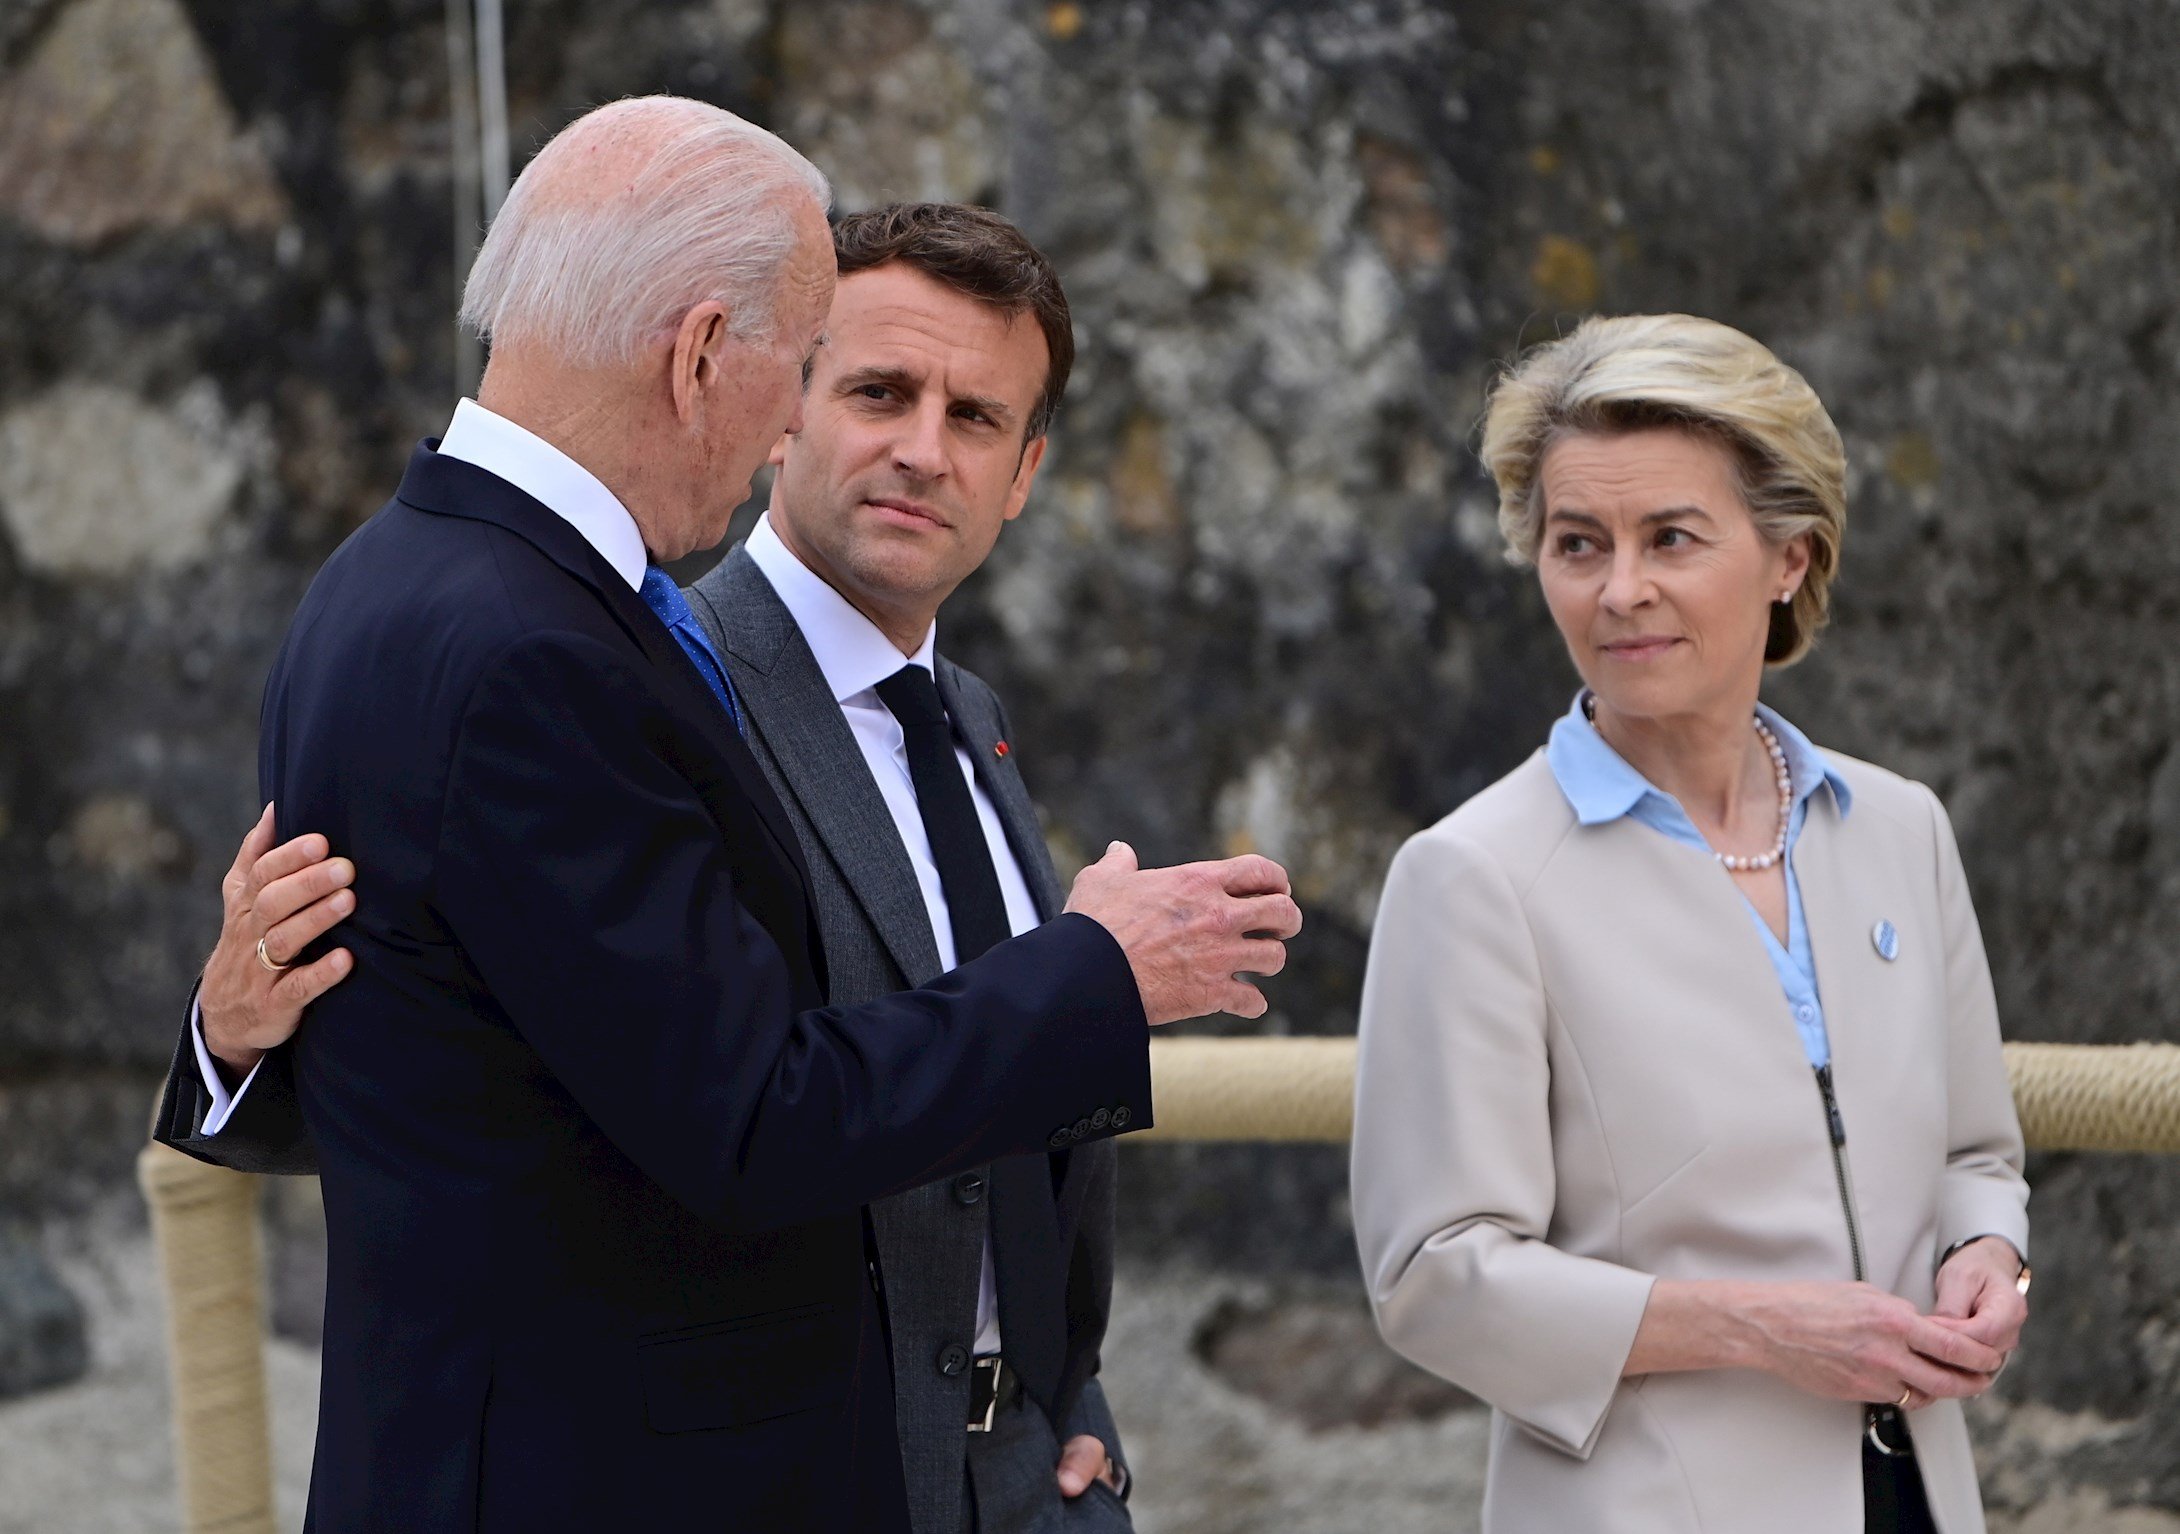 Joe Biden, Emmanuele Macron i Úrsula von der Leyen cabdal G7 juny 2021 Efe